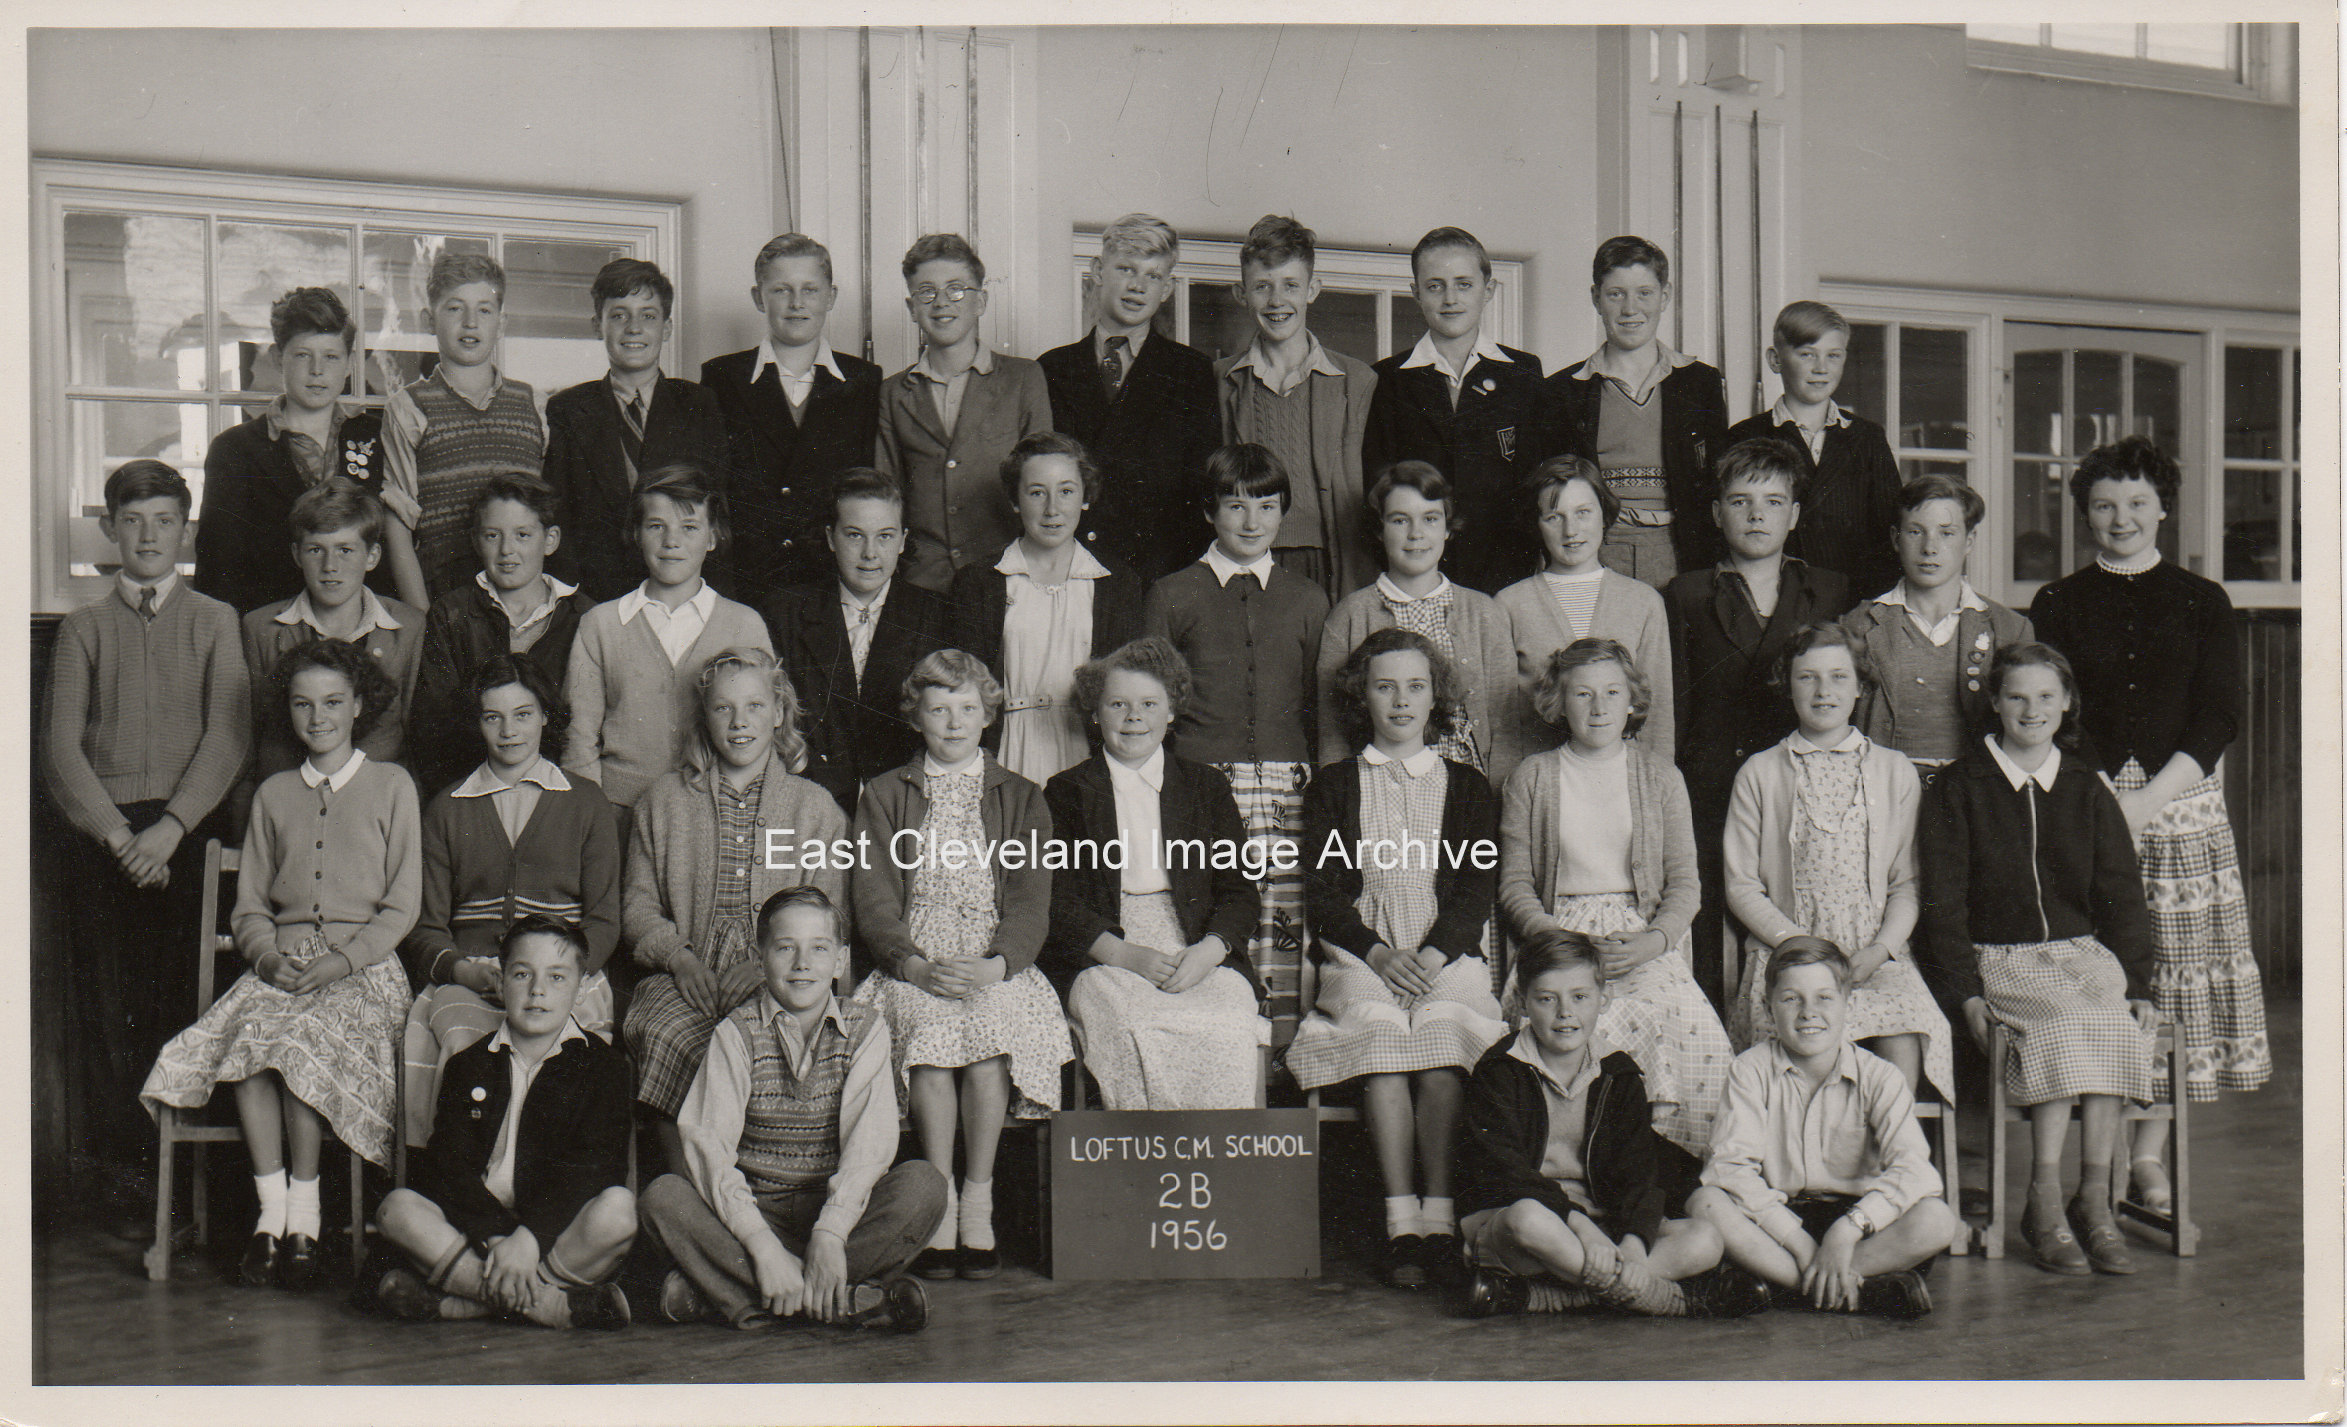 Loftus County Modern School (1956 – Form 2B)